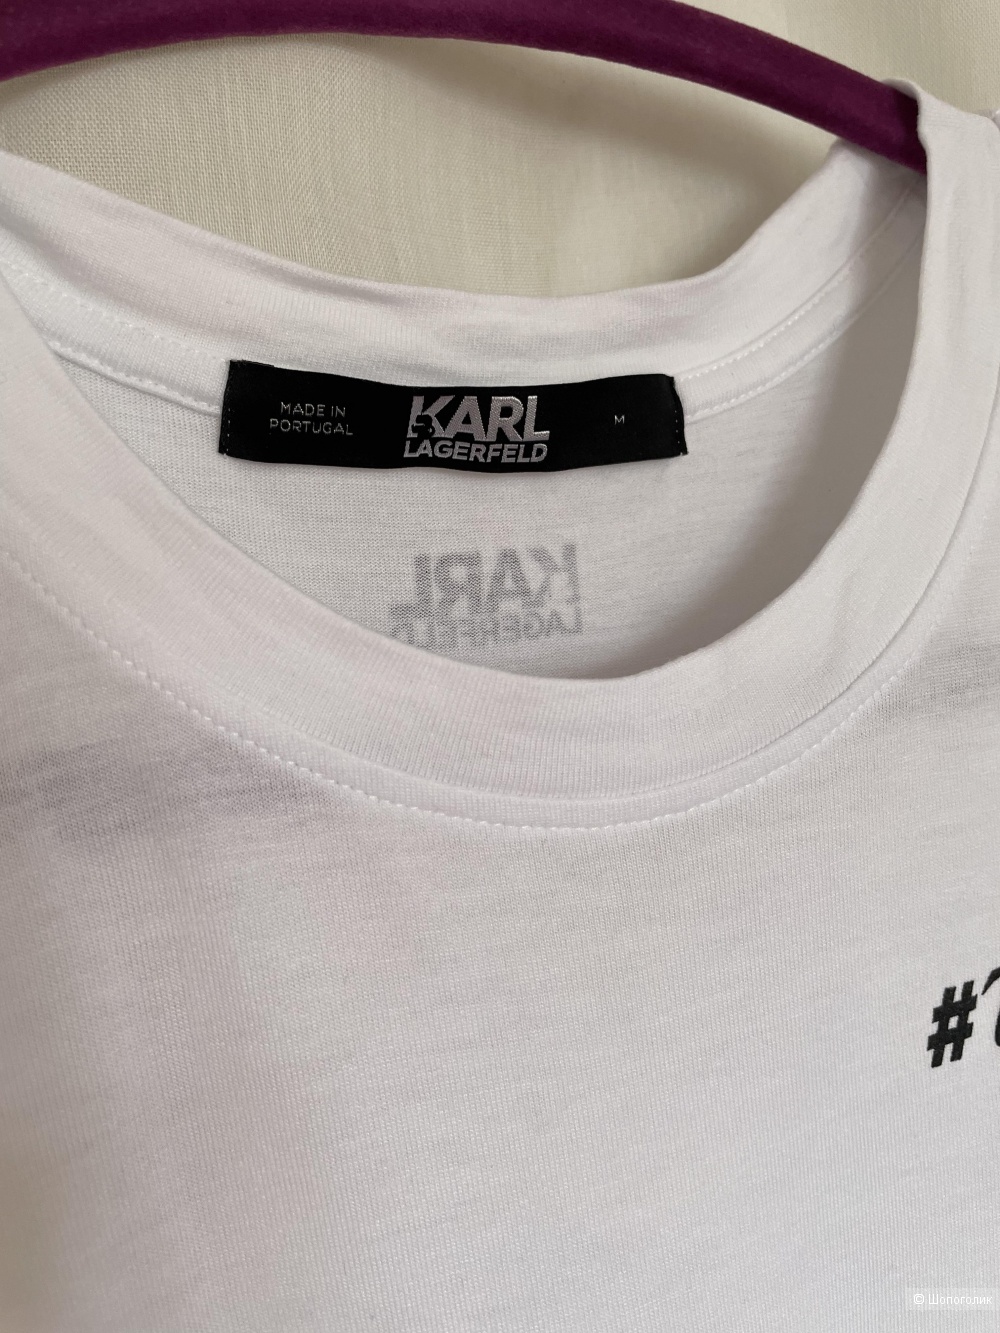 Karl lagerfeld  футболка р. М